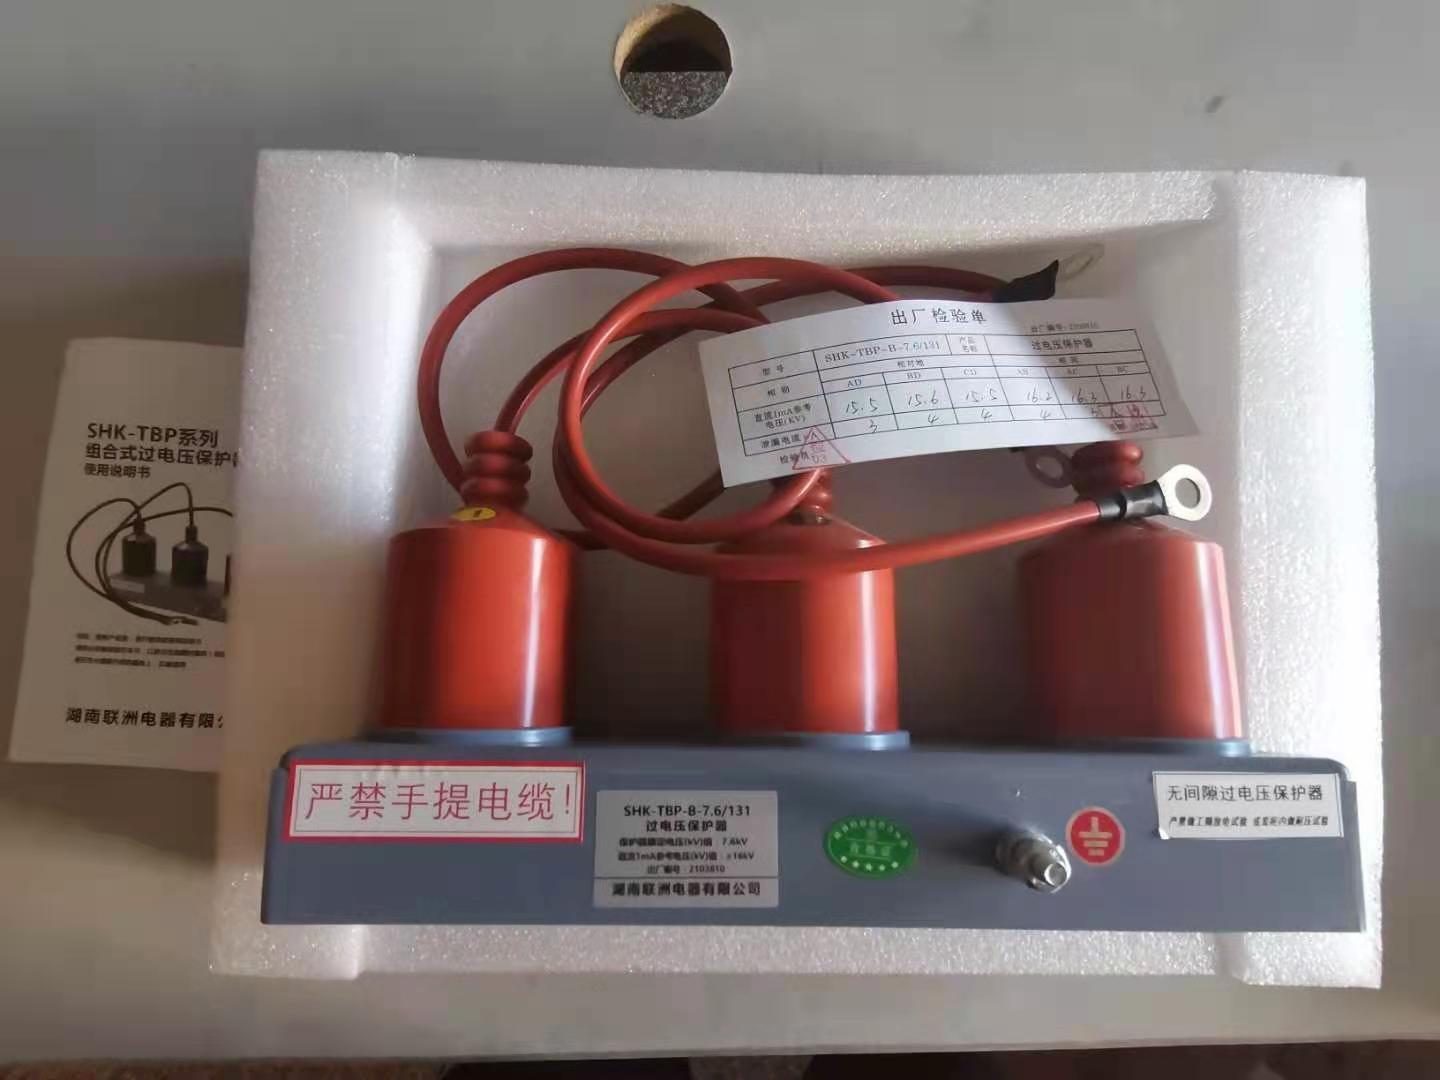 BOD-Z、BOD-D 系列过电压保护器的工作原理和用途